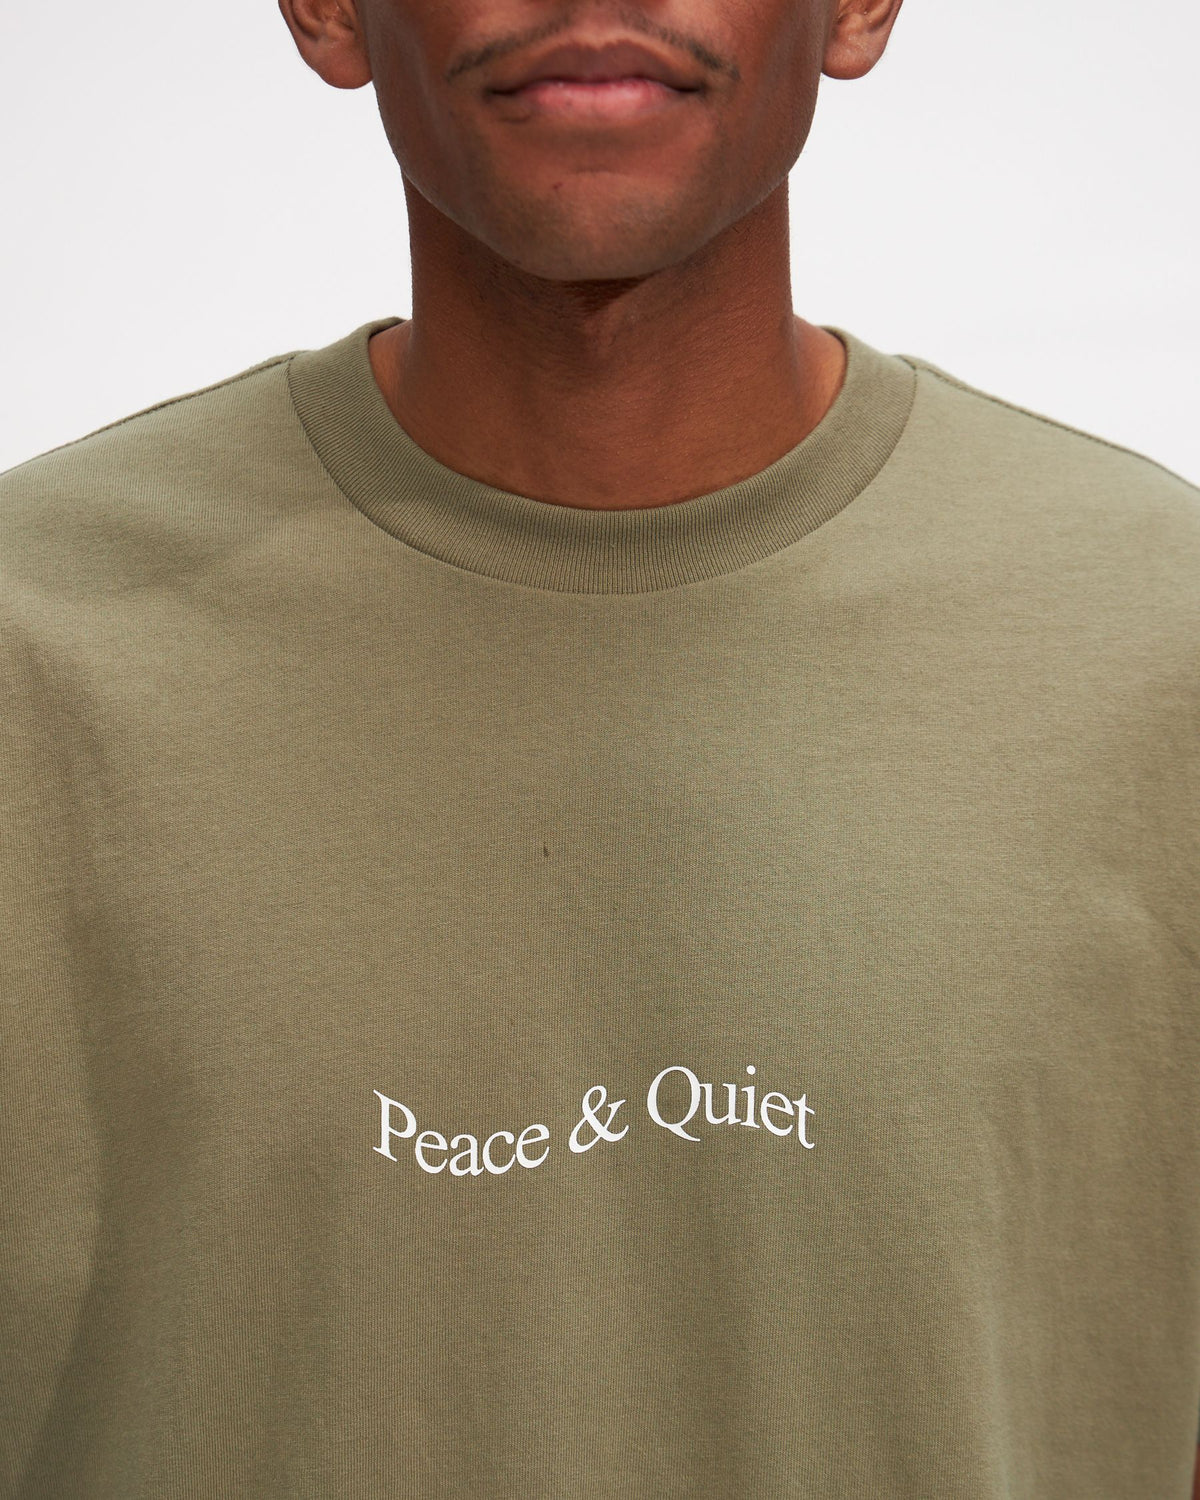 Wordmark T-Shirt in Olive